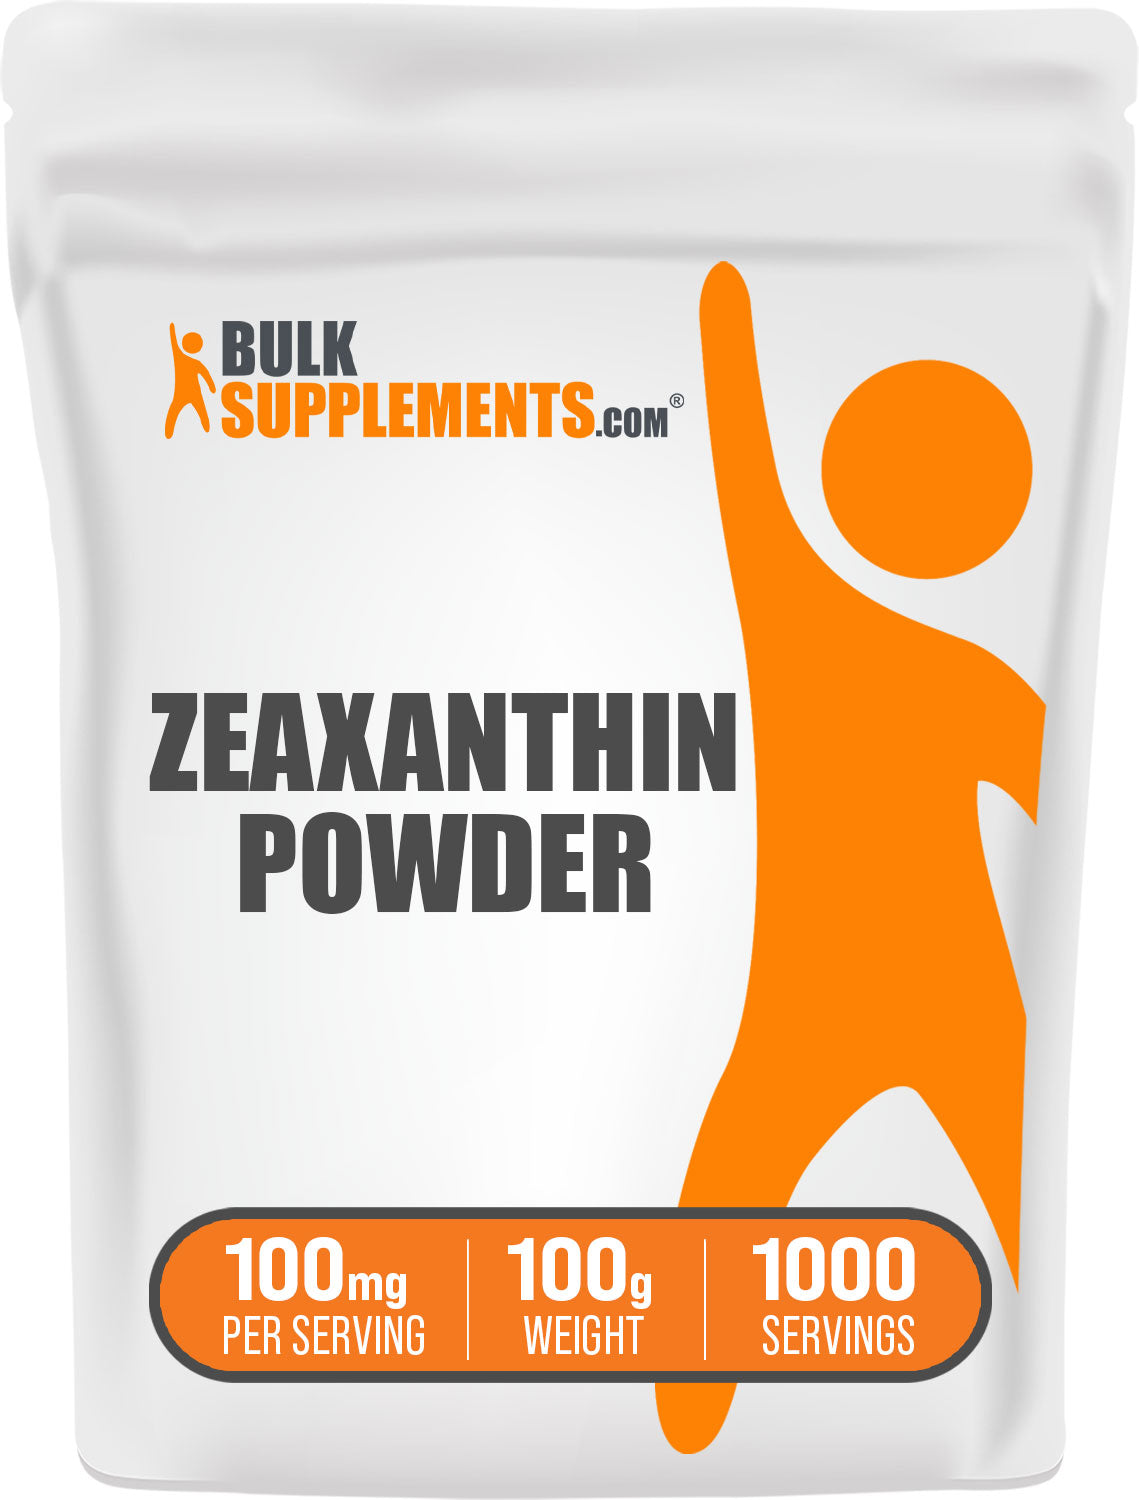 BulkSupplements.com Zeaxanthin Powder 100g Bag